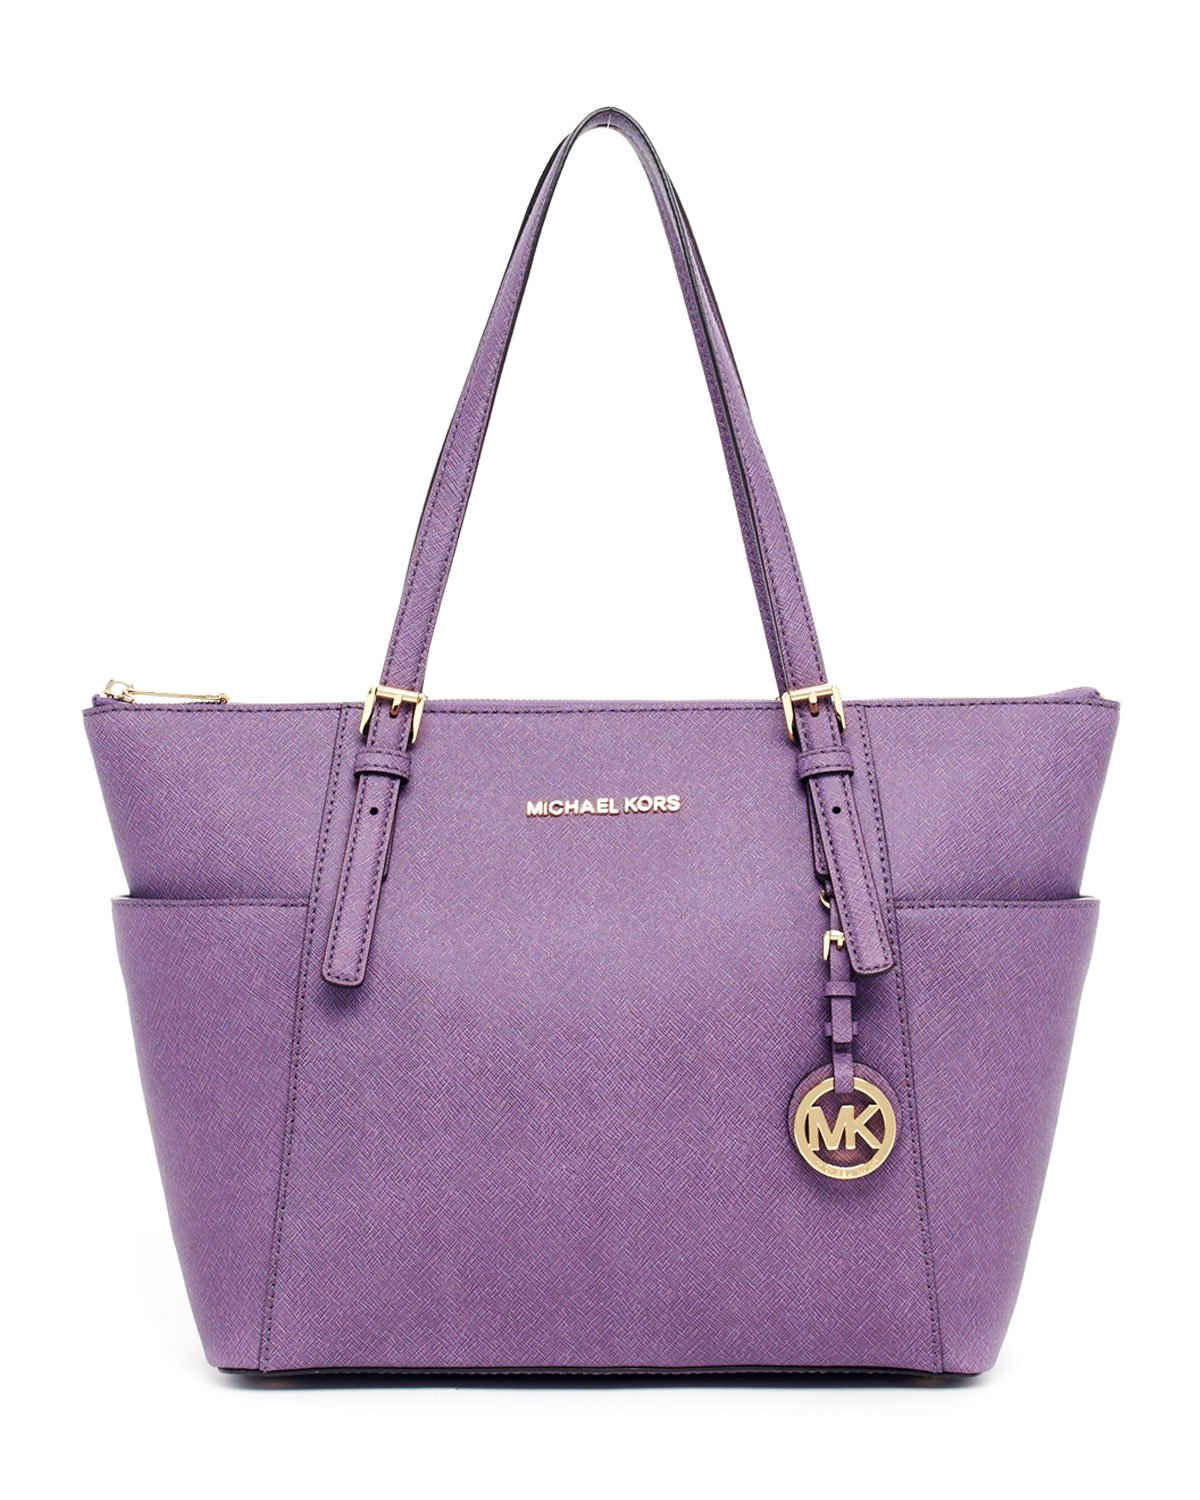 michael kors lavender handbag